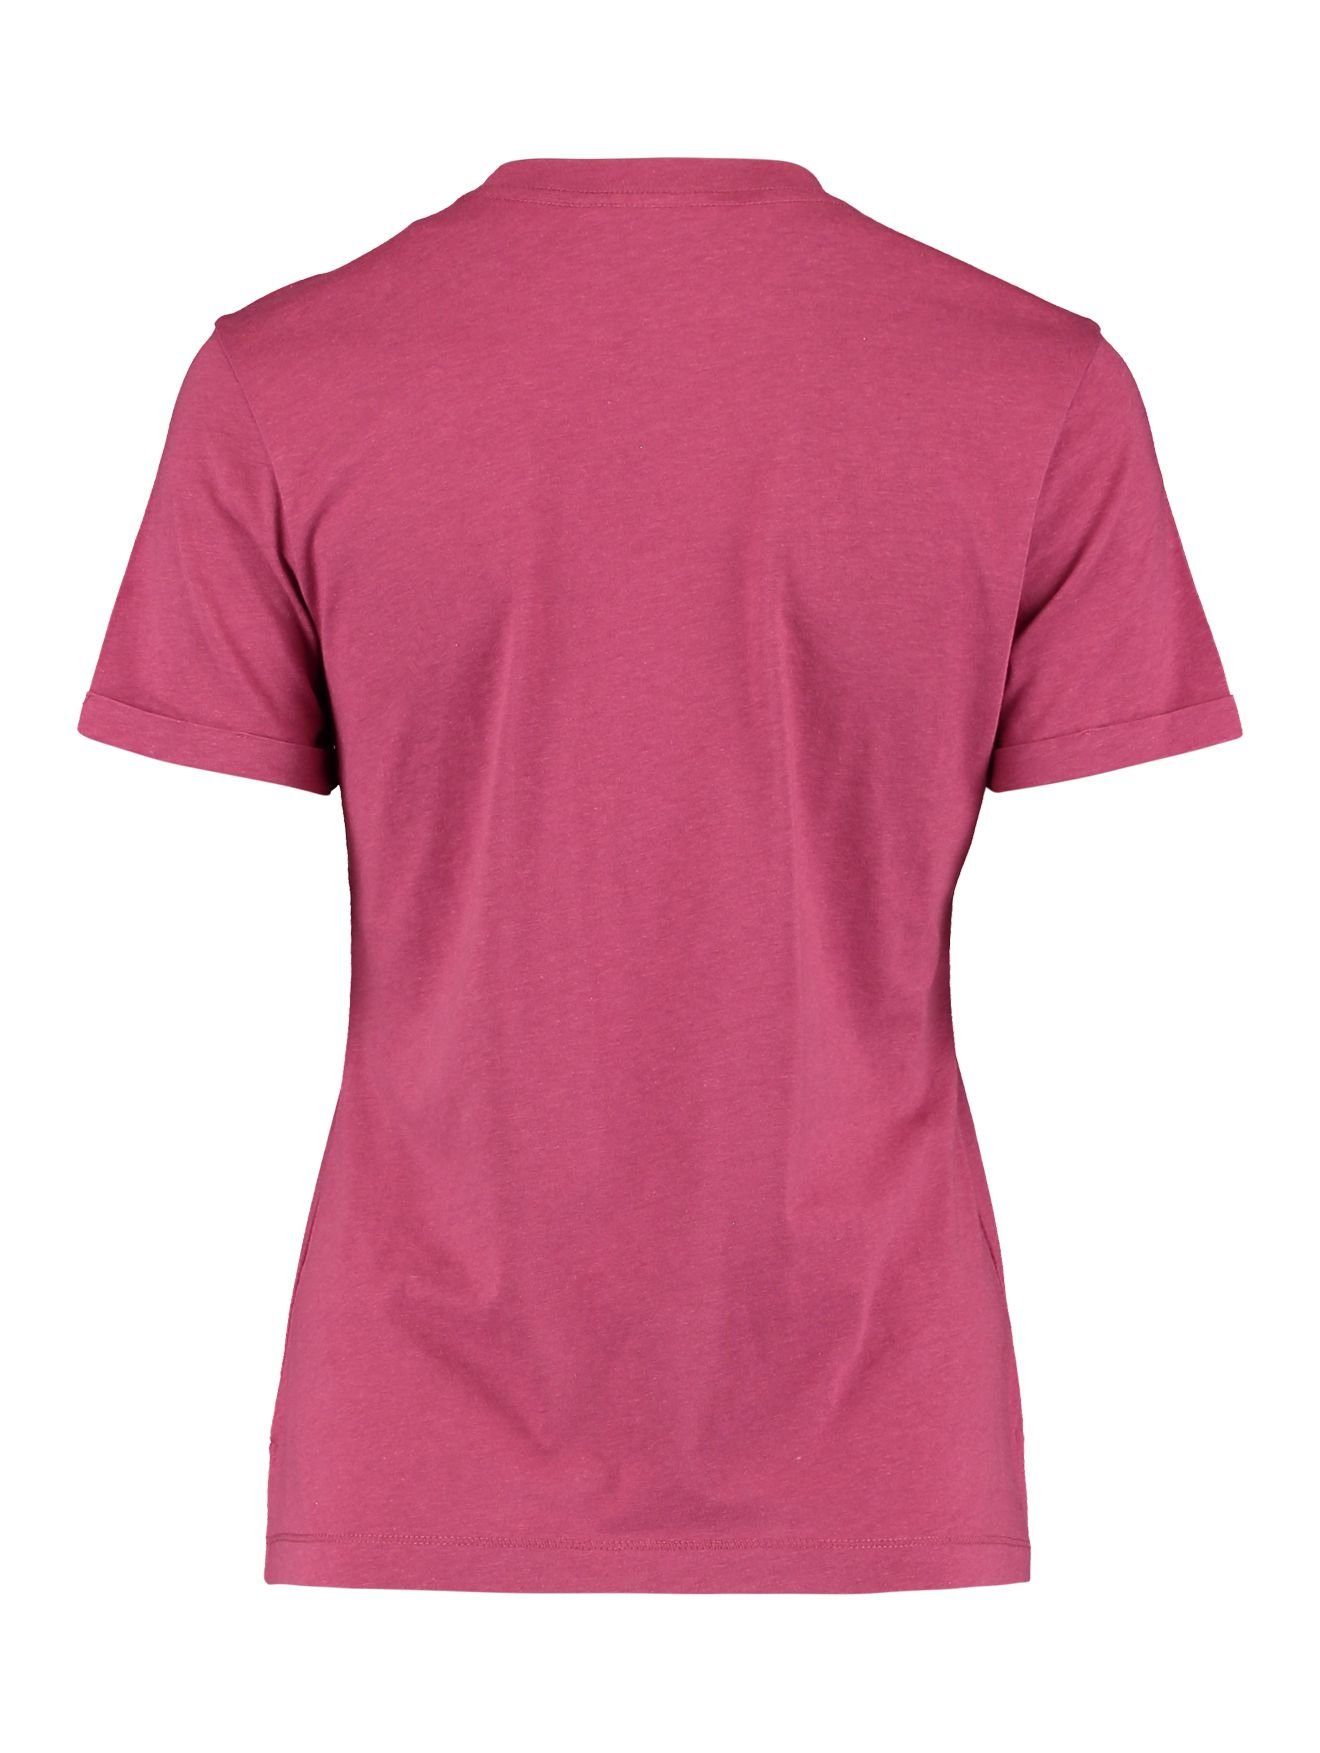 ZABAIONE Ma44delaine Shirt Berry T-Shirt